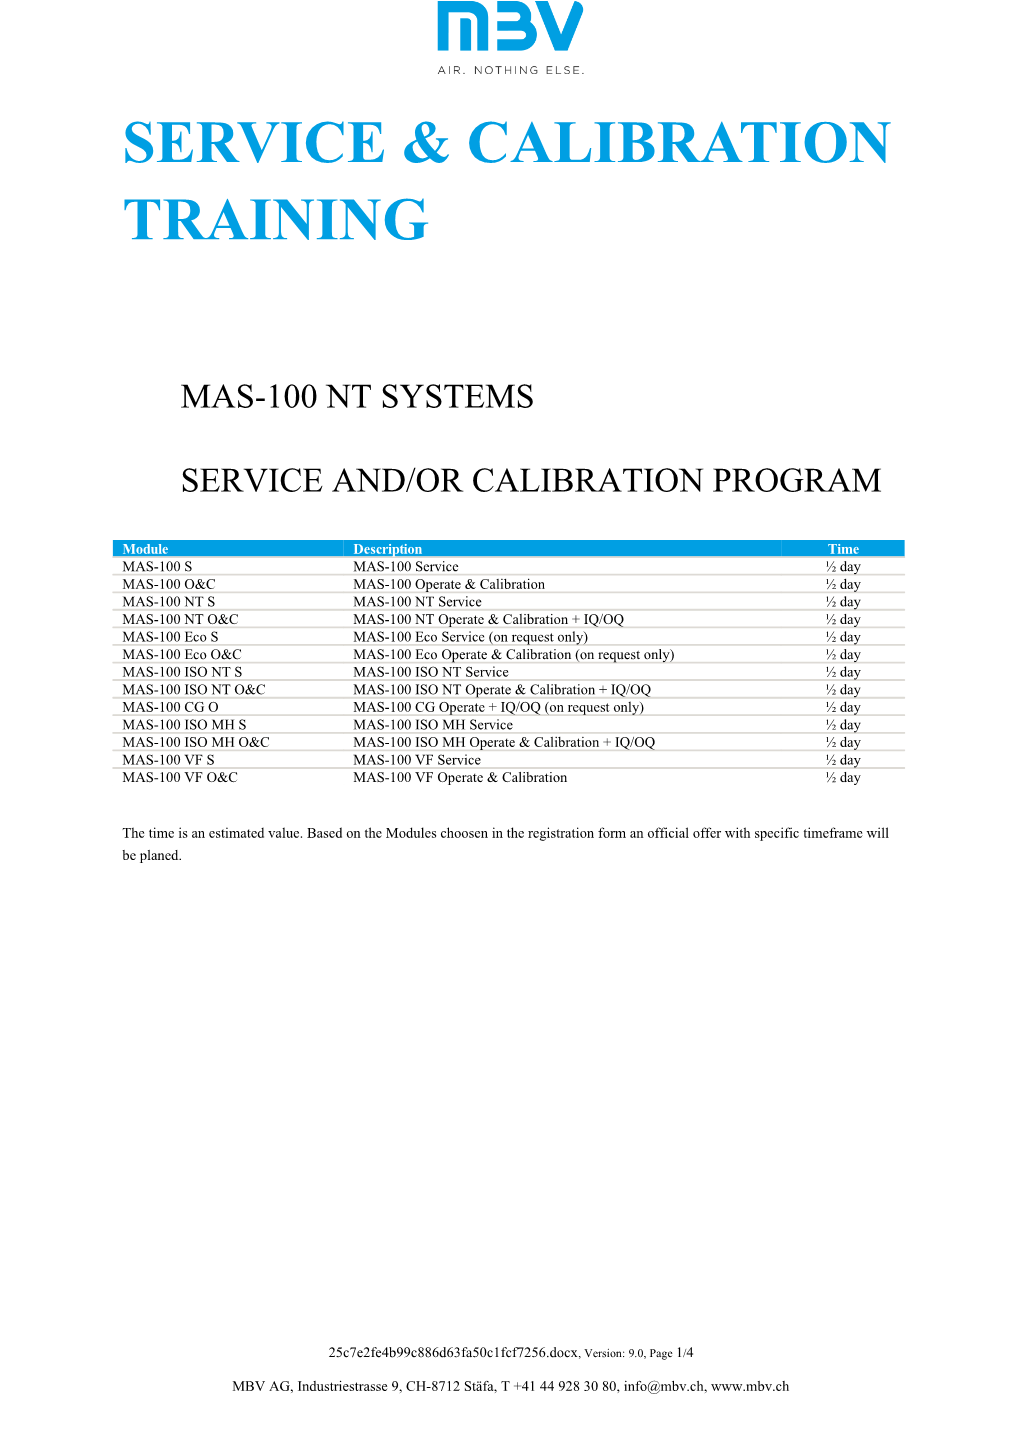 Service & Calibration Training